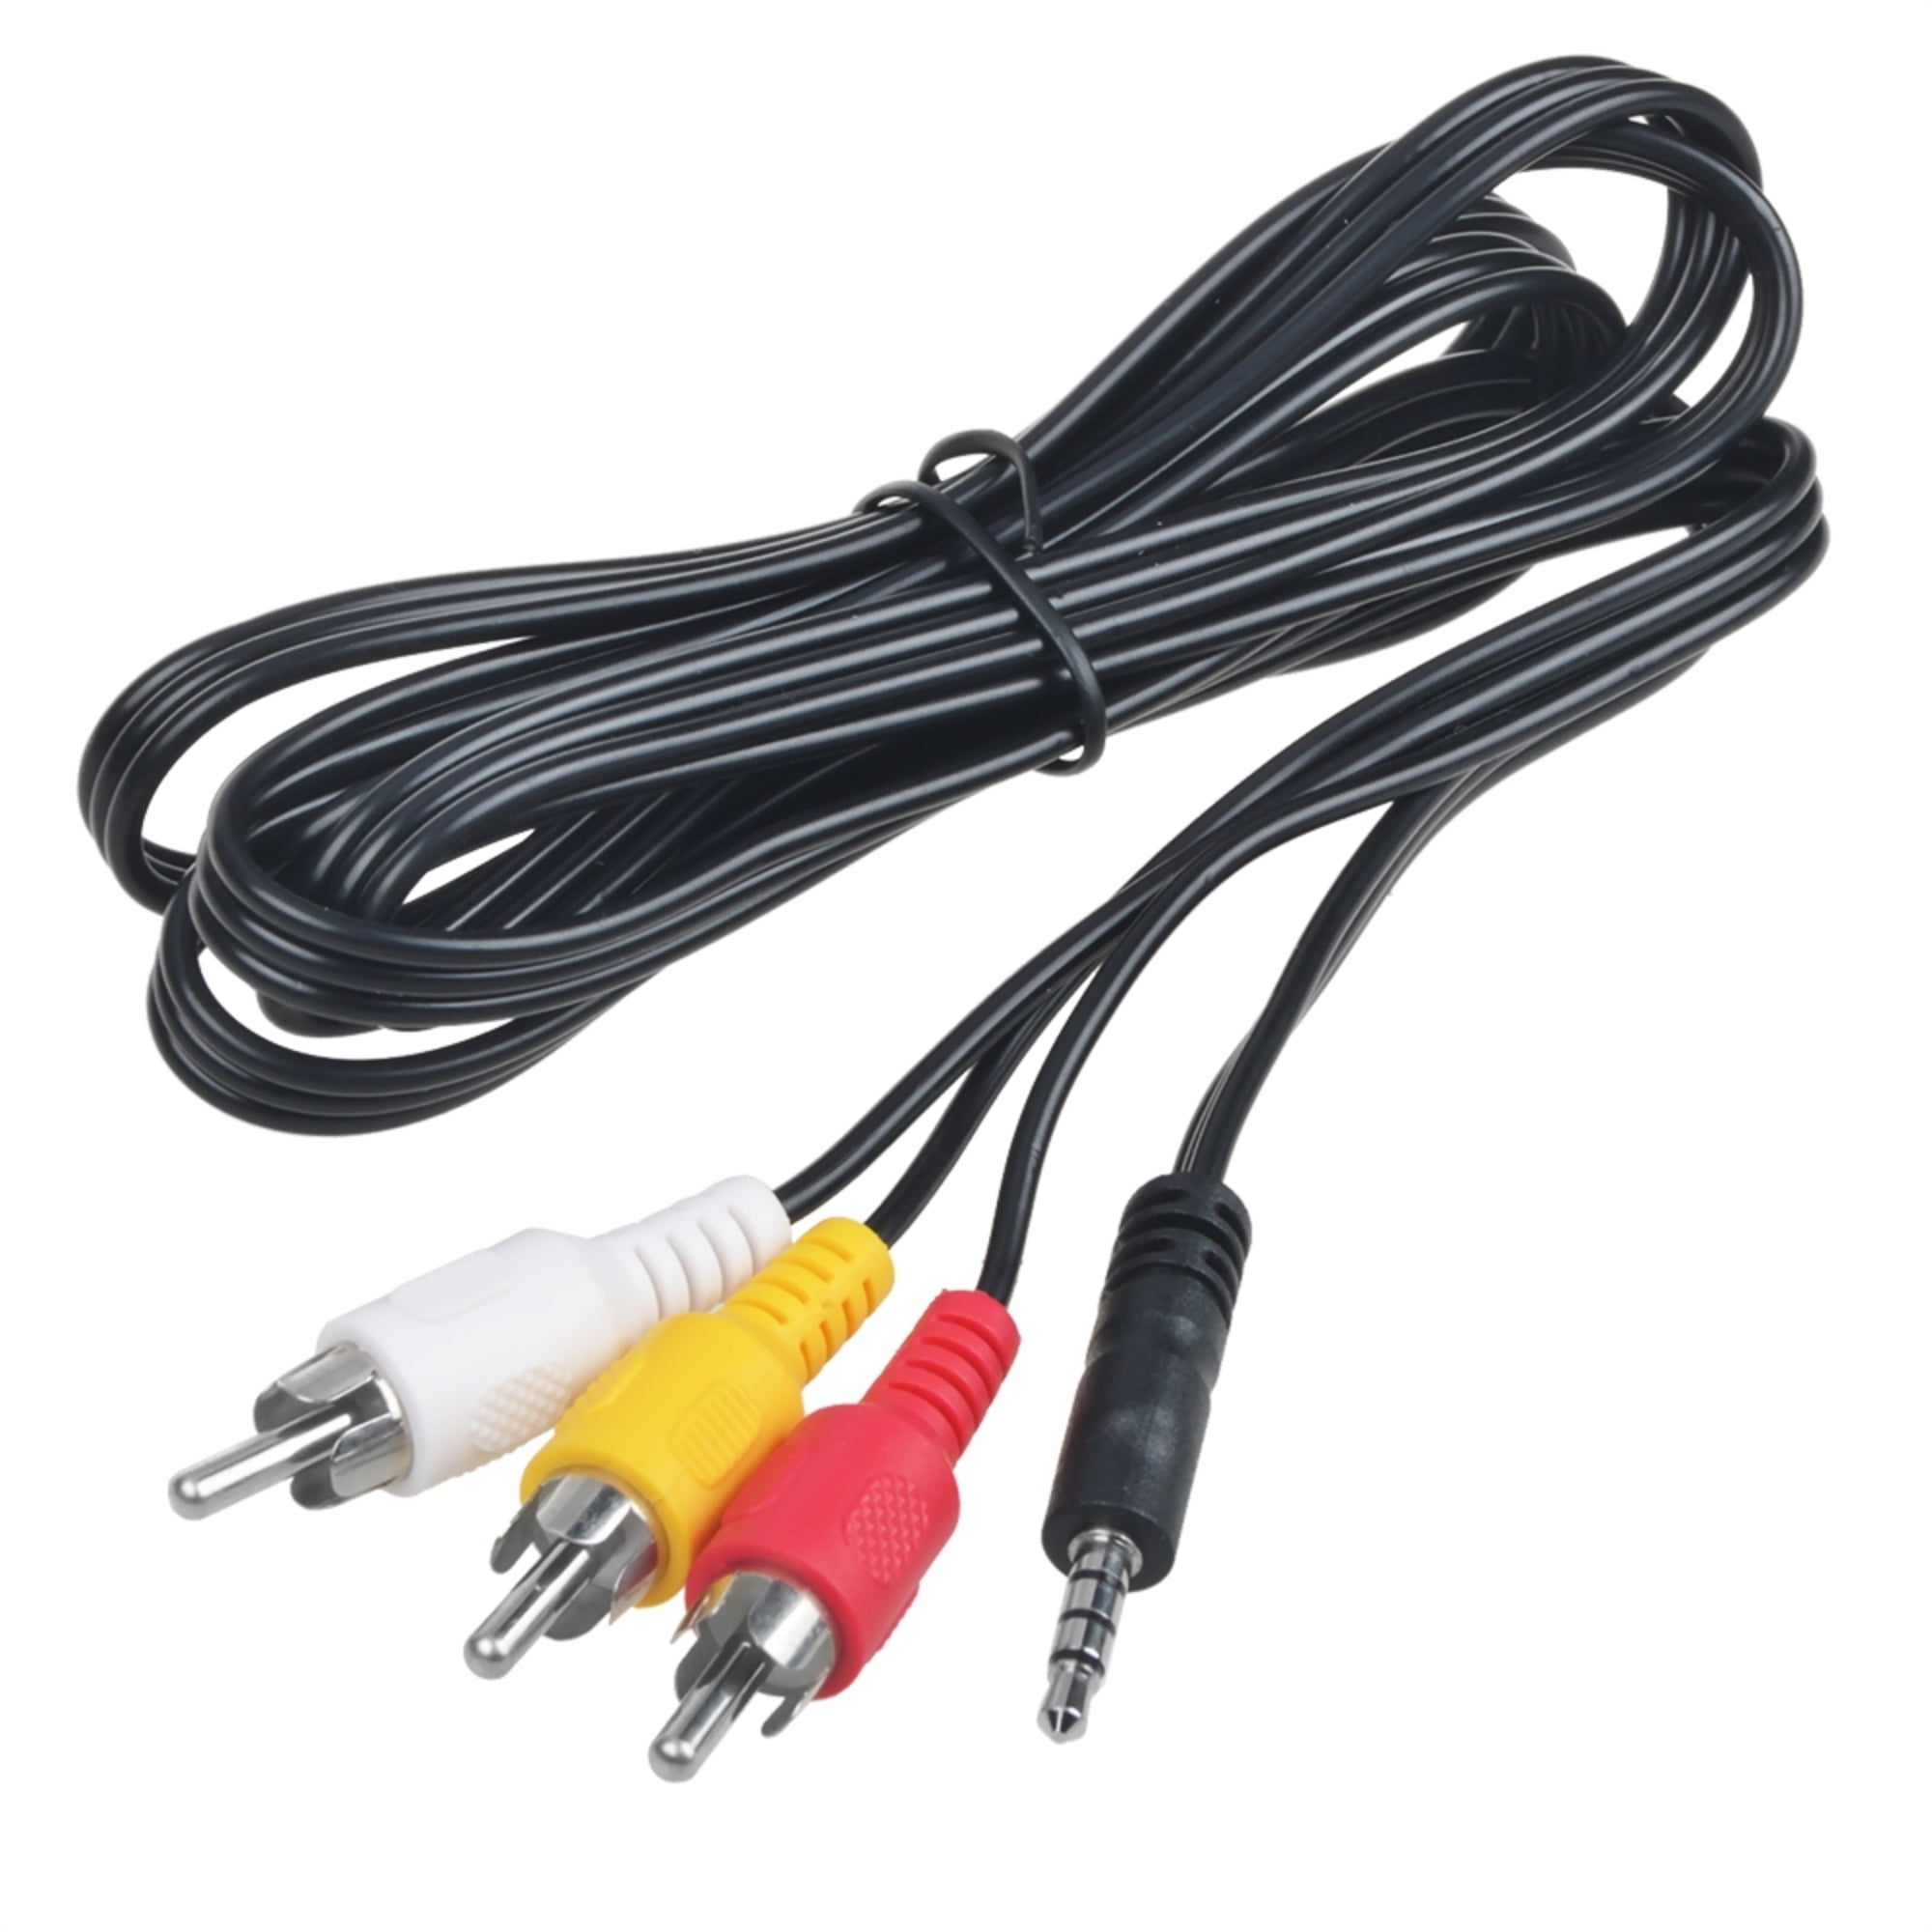  MaxLLTo USB Data+AV A/V TV Video Cable Cord for